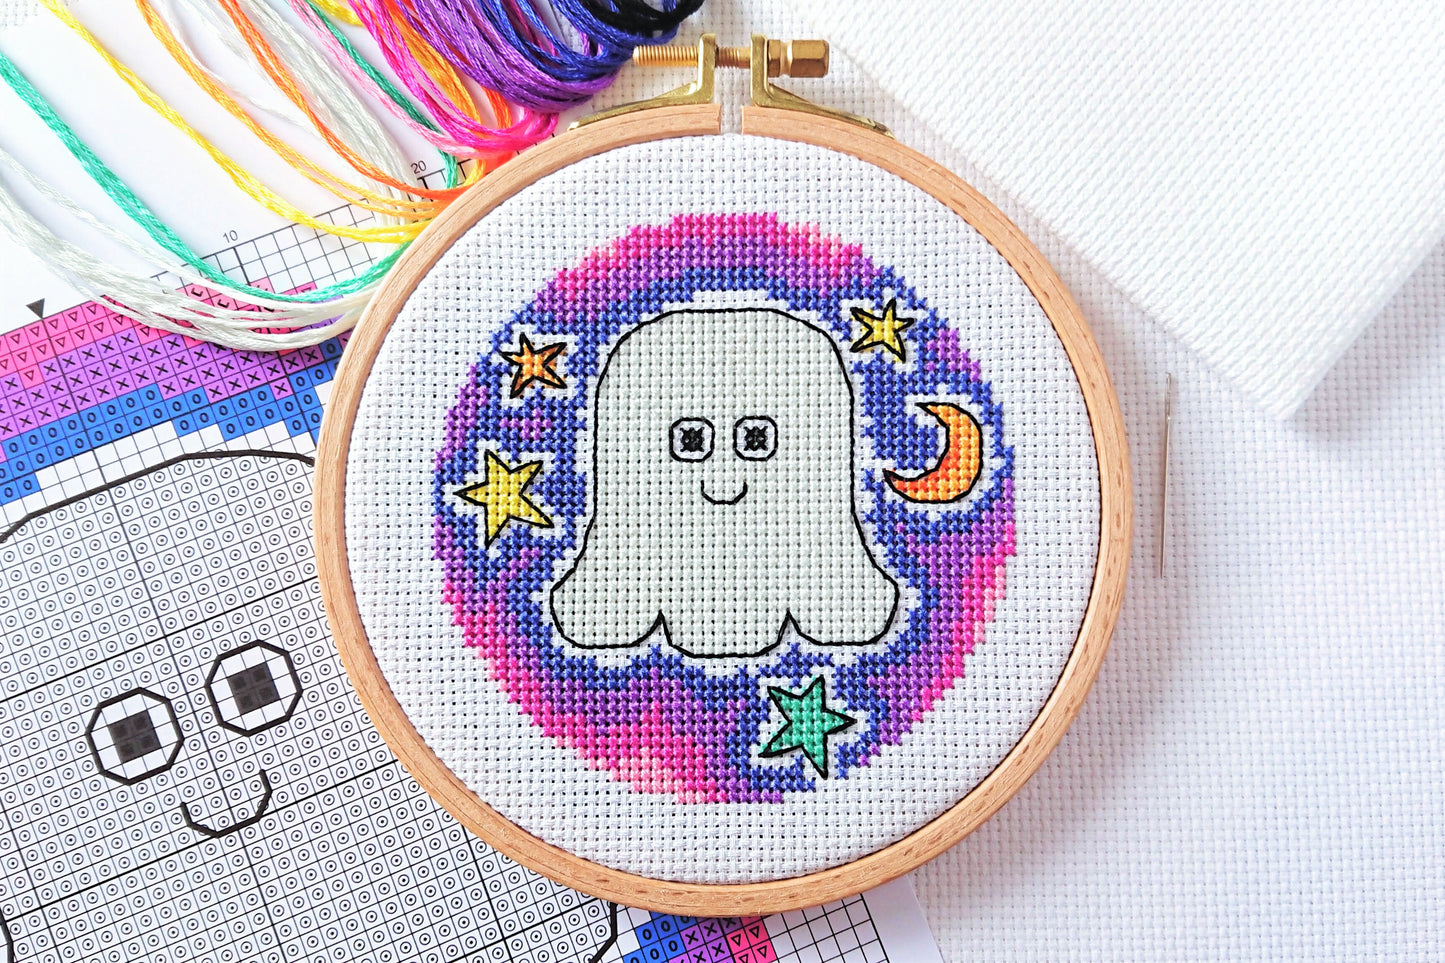 Halloween Ghost Cross Stitch Kit